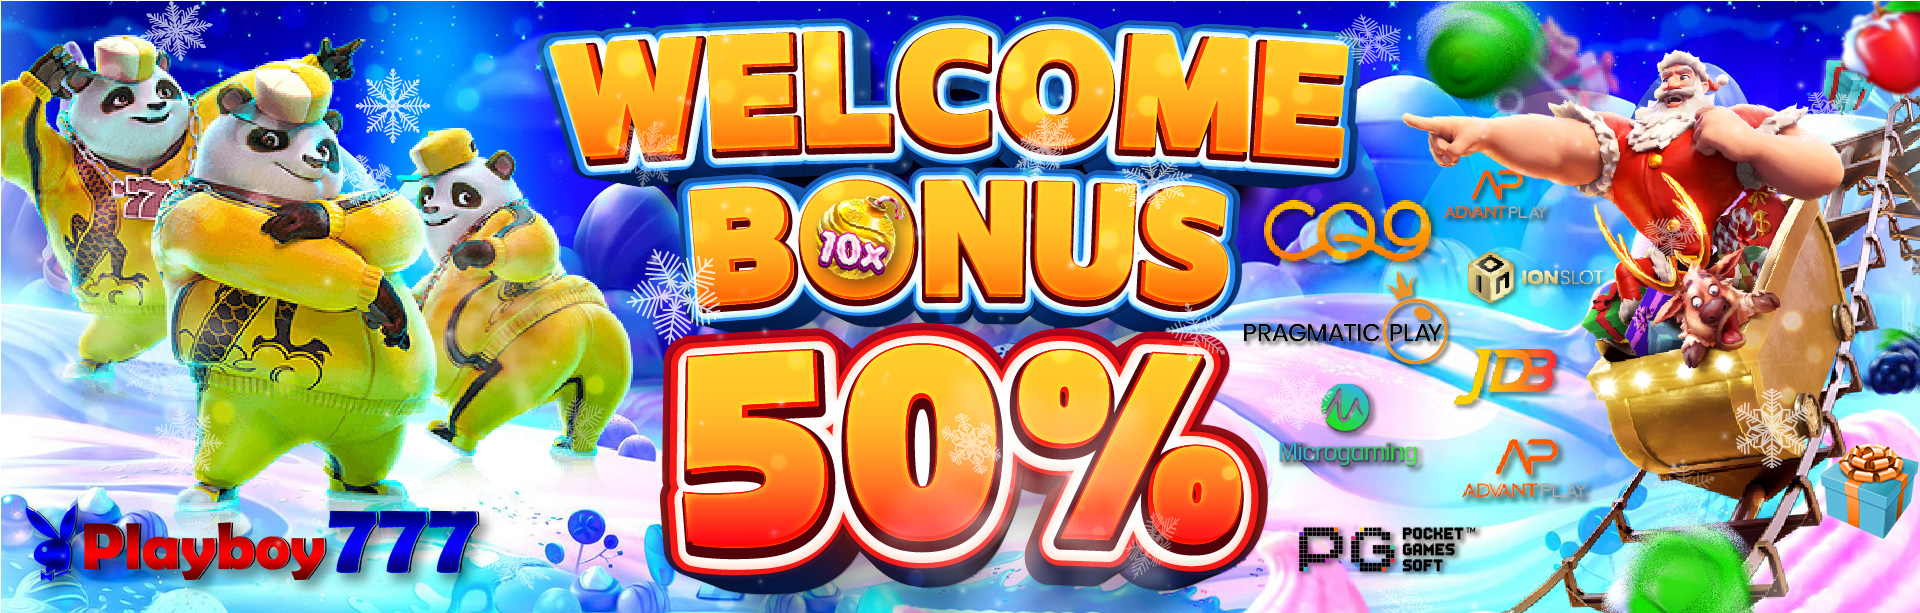 Bonus Welcome 50%